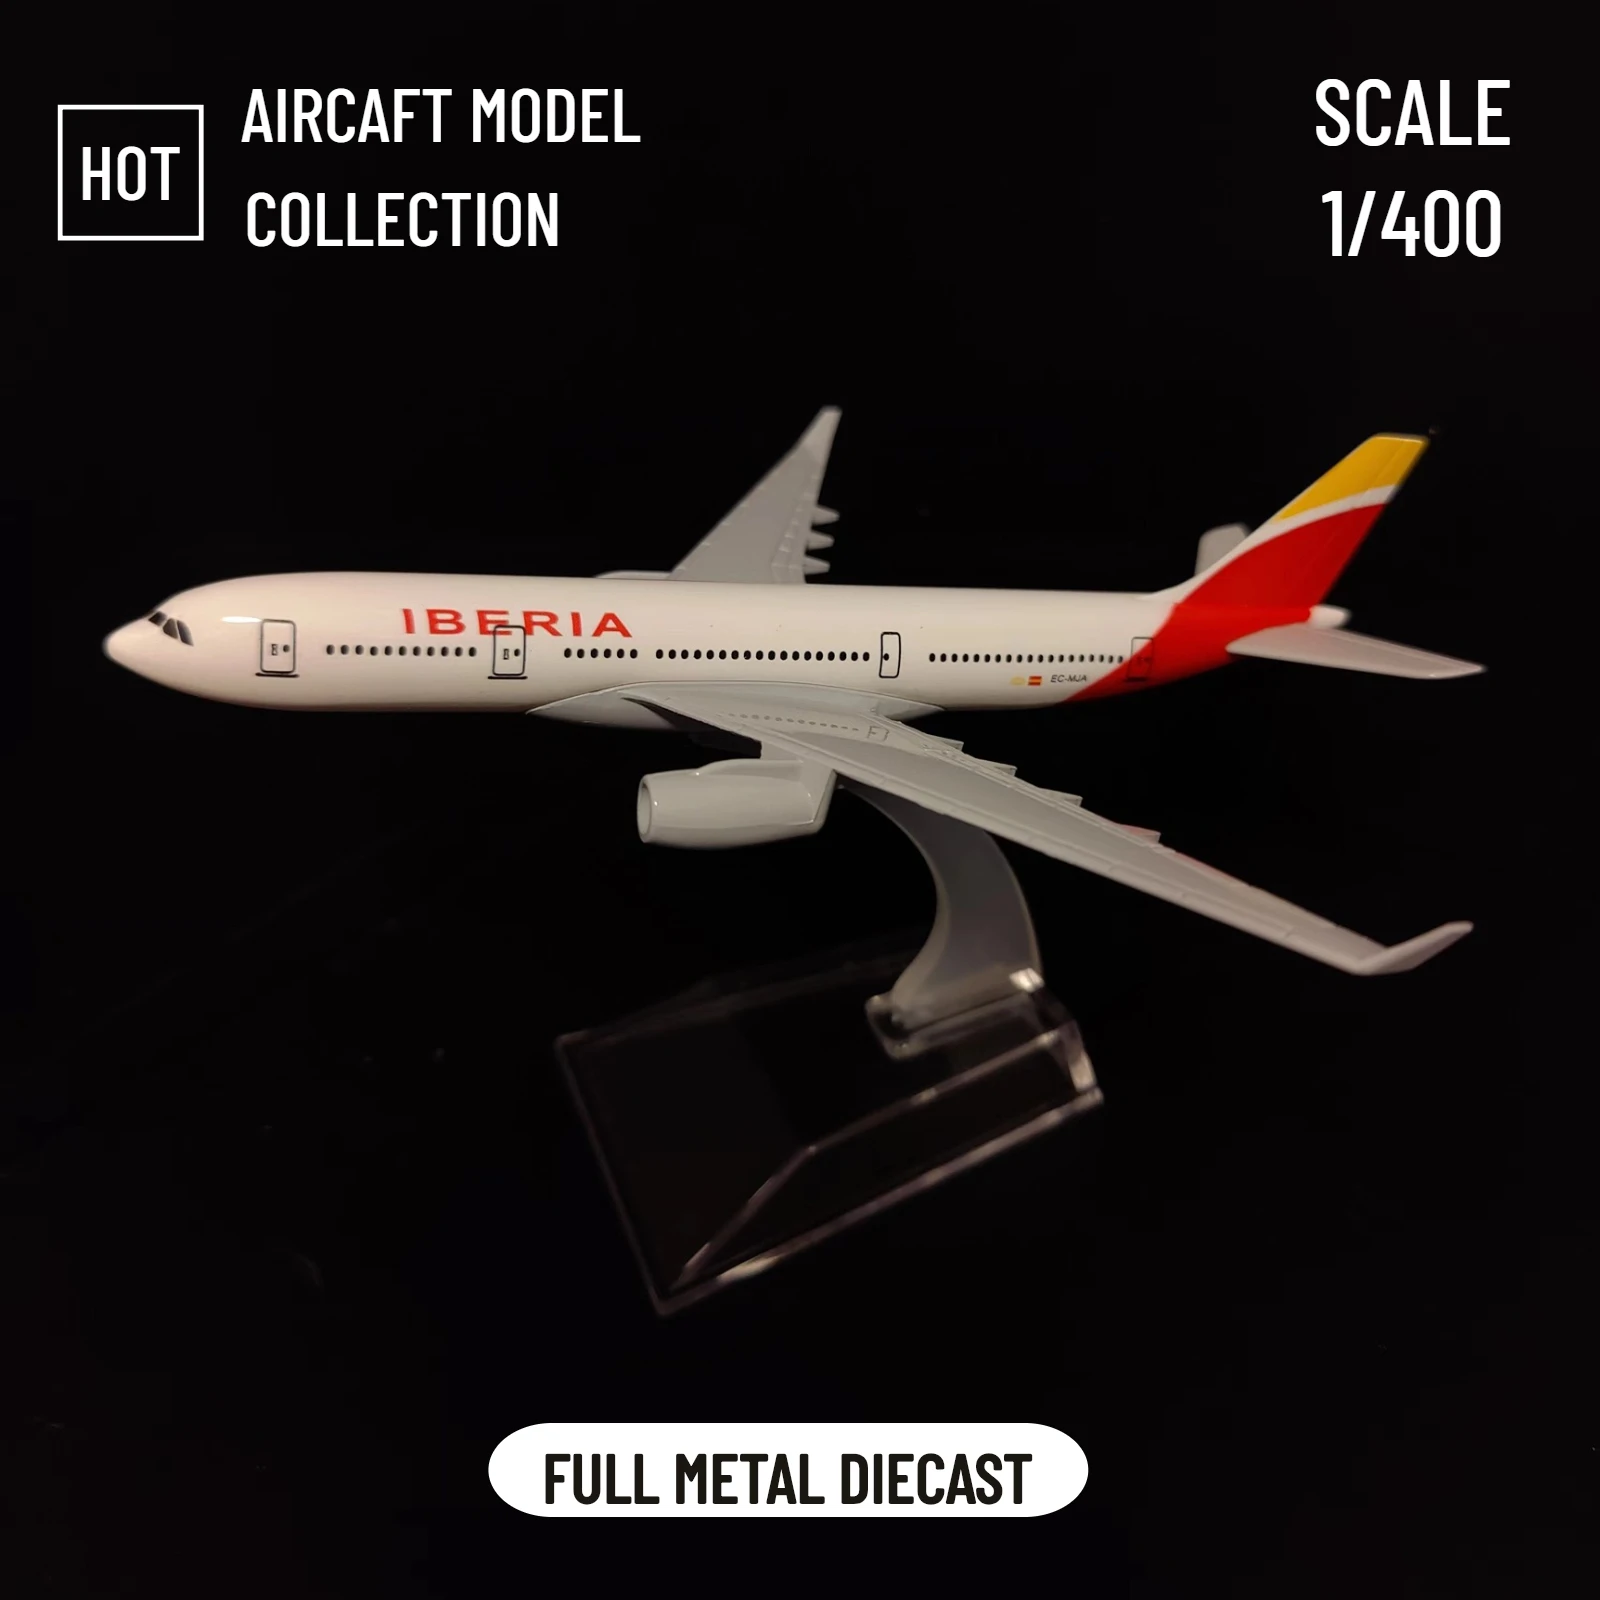 

Scale 1:400 Metal Replica Aircraft Spain Iberia Airlines Diecast Model 15cm Aviation Collectible Miniature Souvenir Ornament